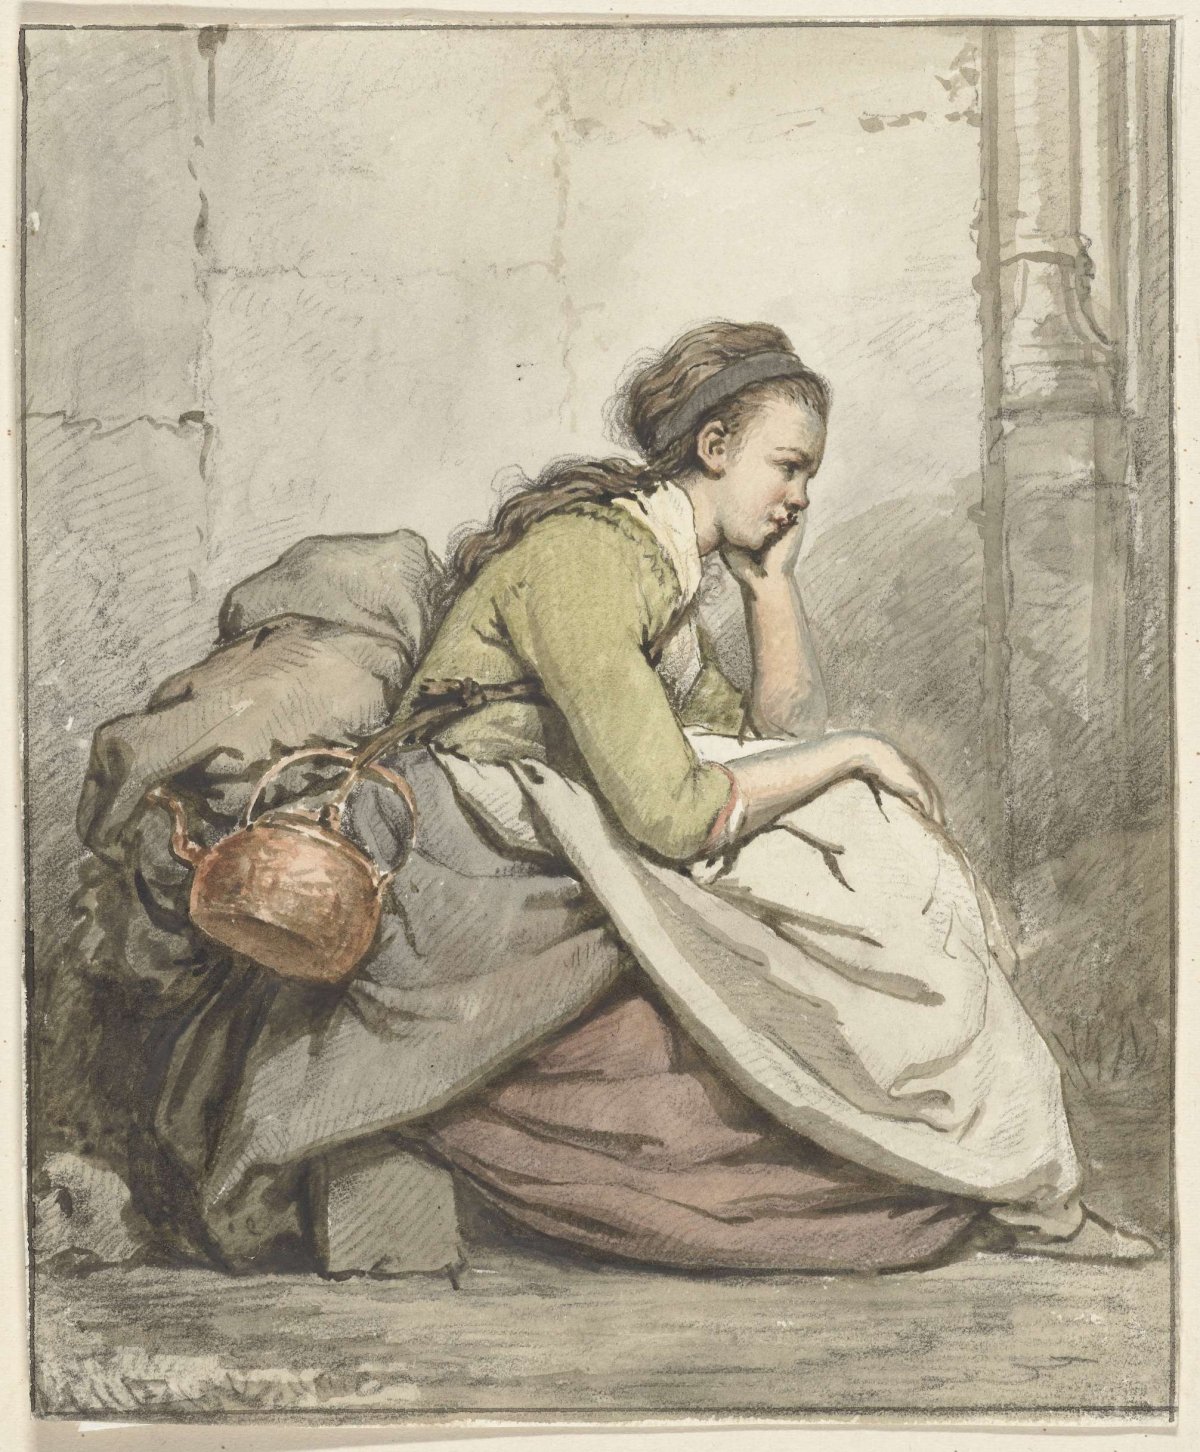 Seated woman holding a copper cauldron, Abraham van Strij (I), 1763 - 1826